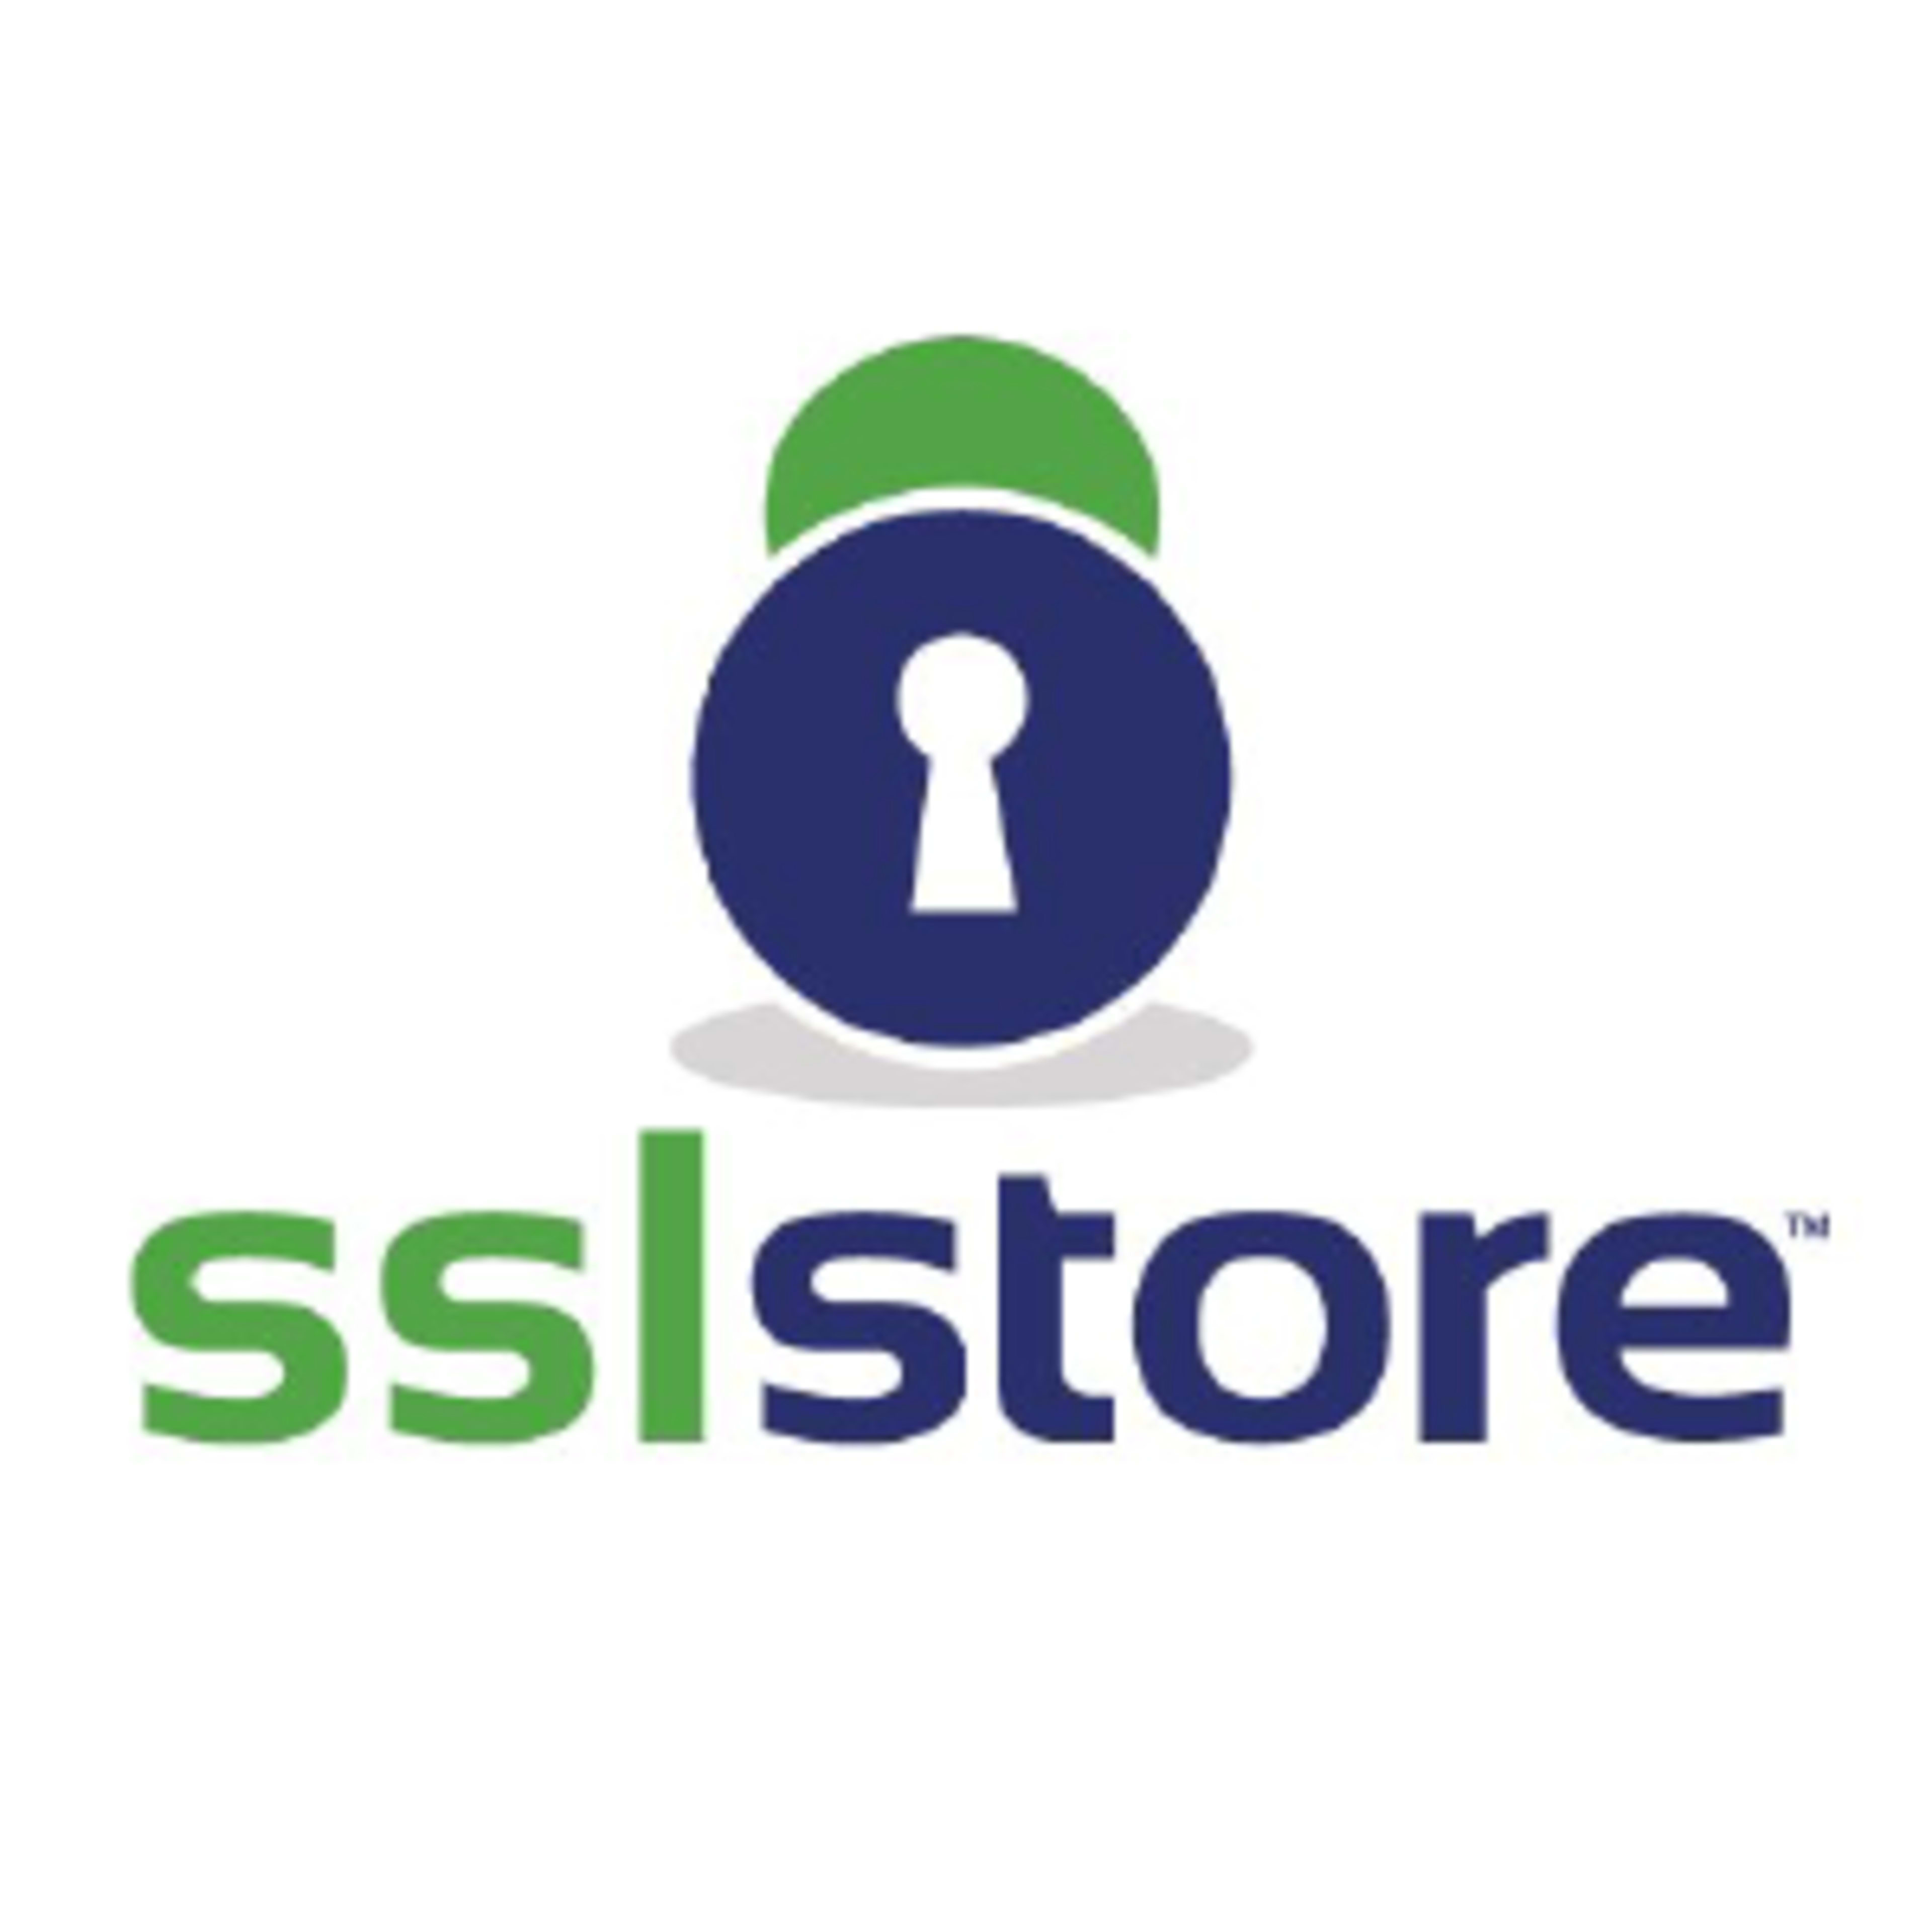 The ssl storeCode